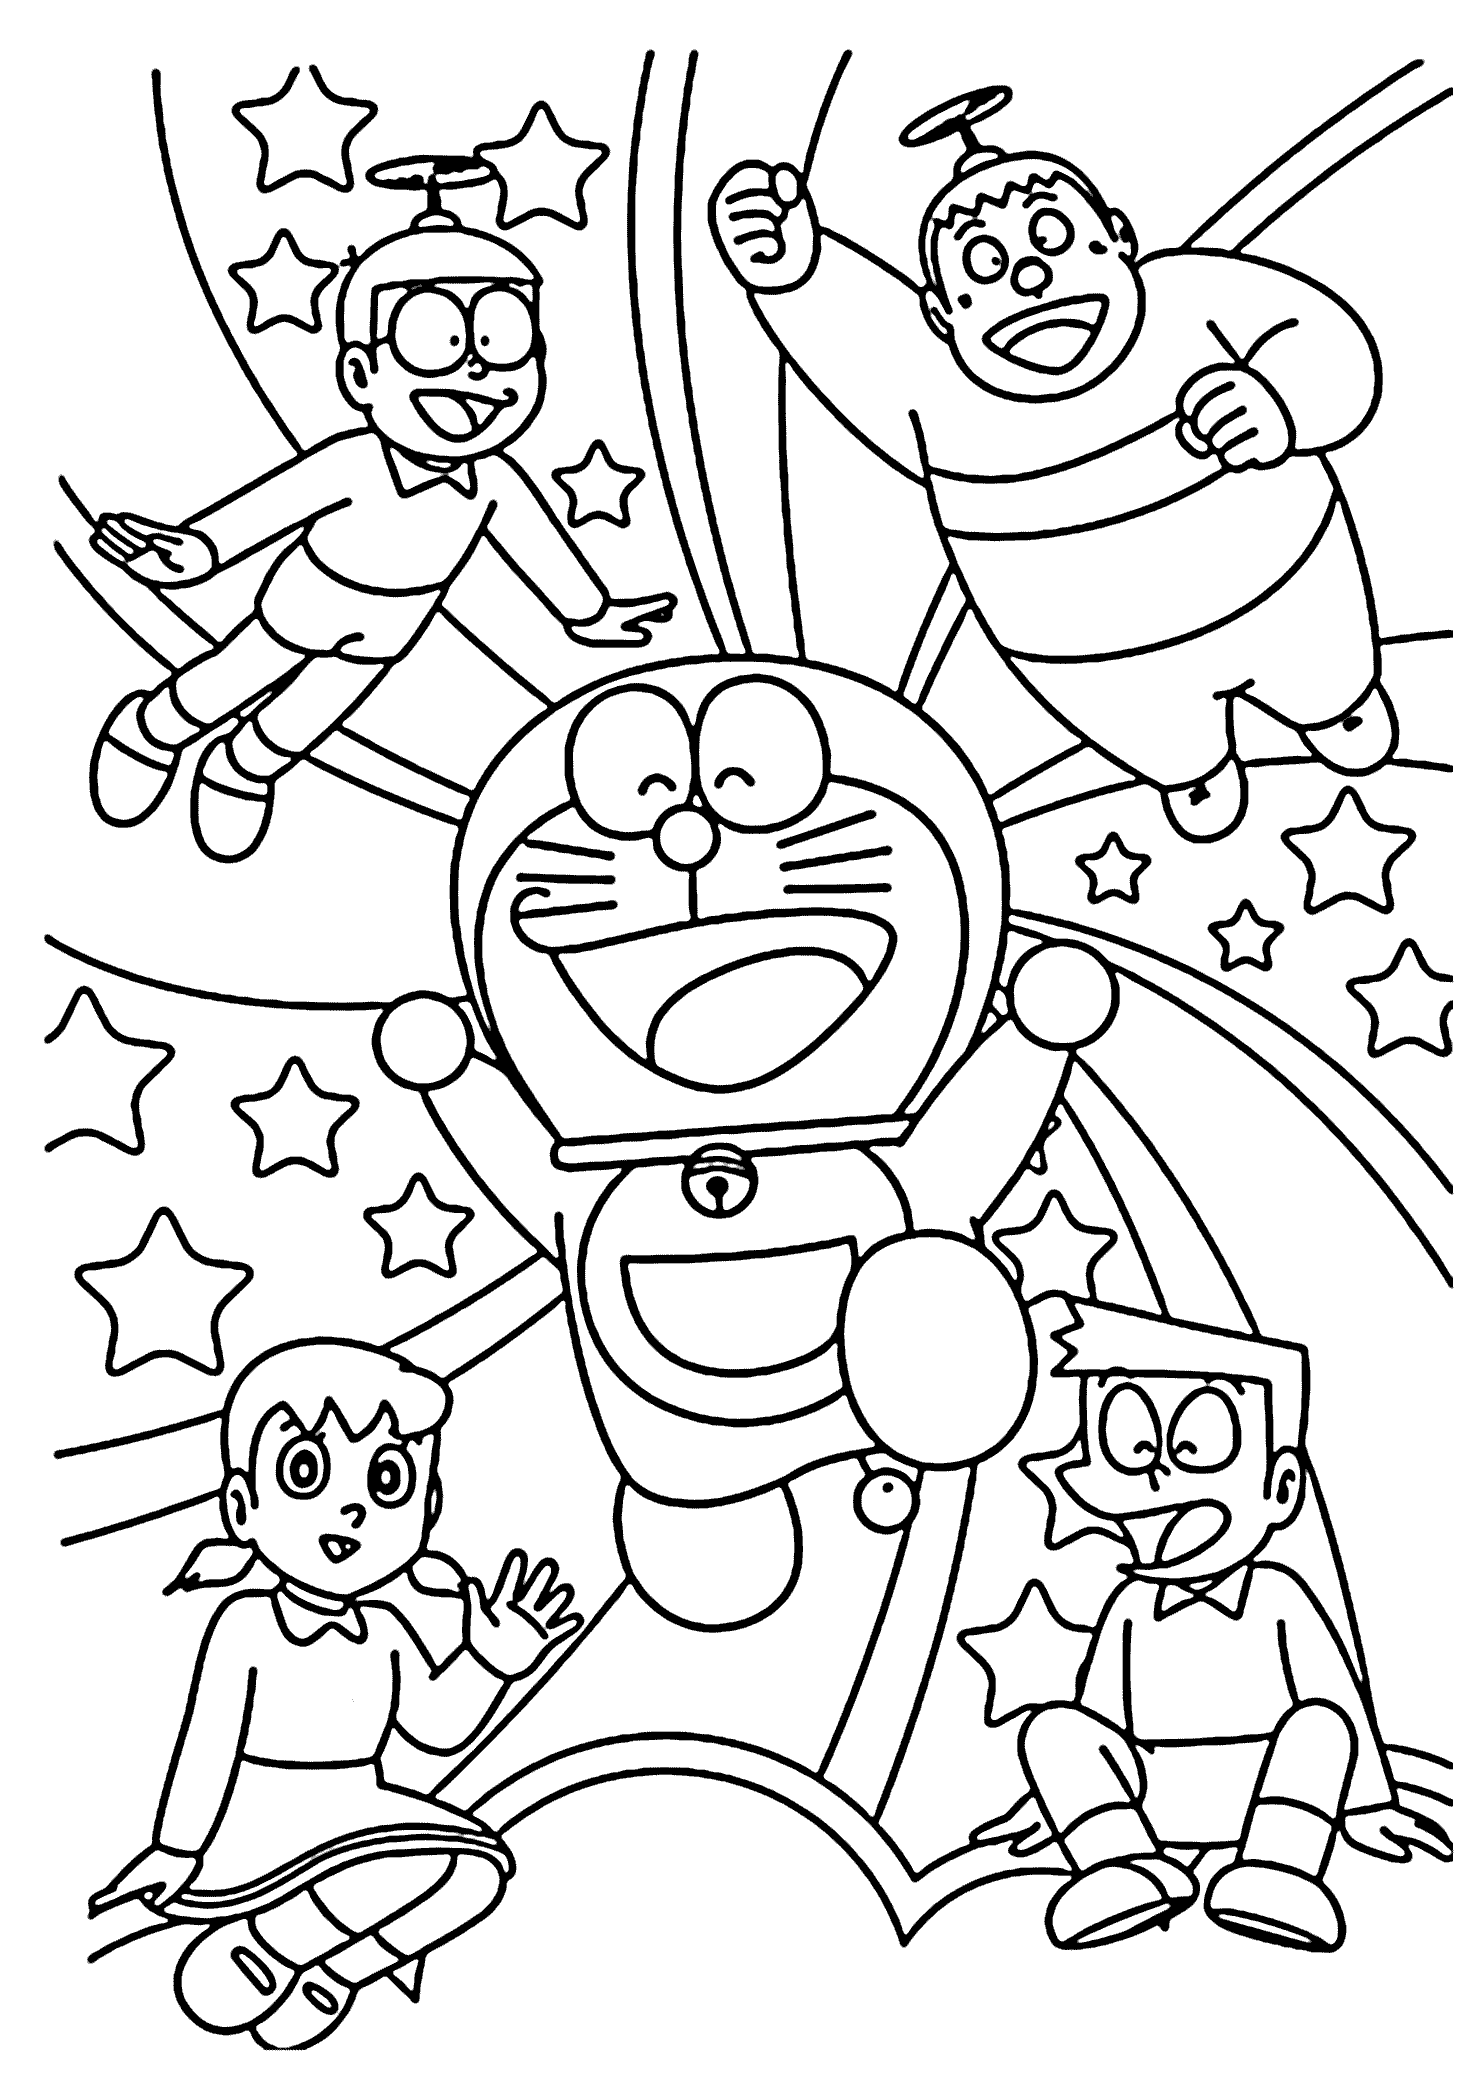 Doraemon Coloring Pages  100 Best Coloring Pages